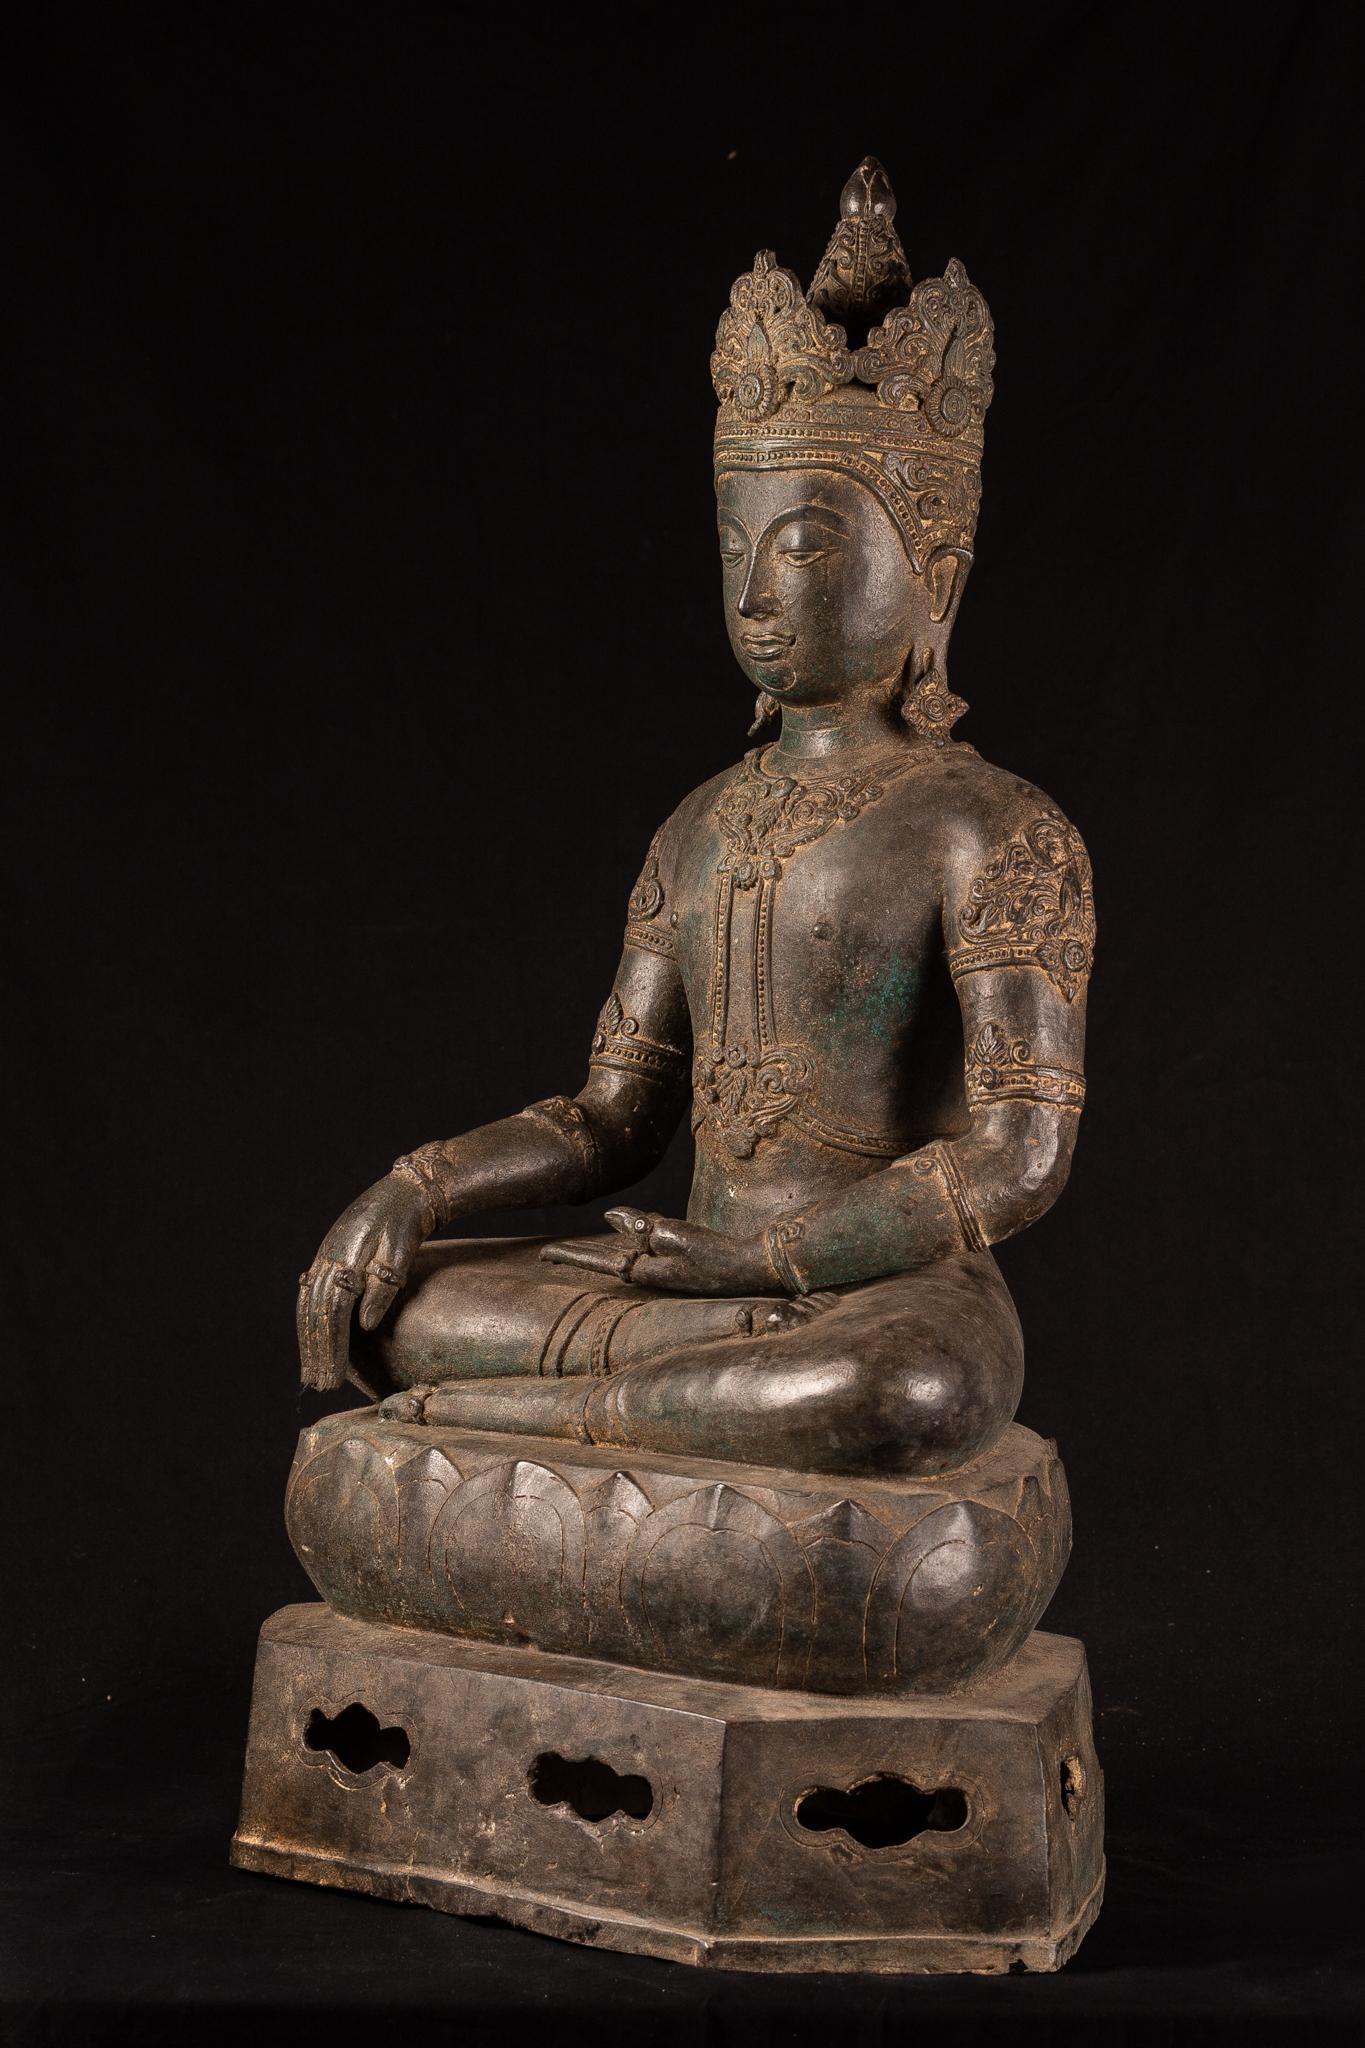 Thai Royal Antique Bronze Buddha with Imperial Attire, Fine Details, 18th Century